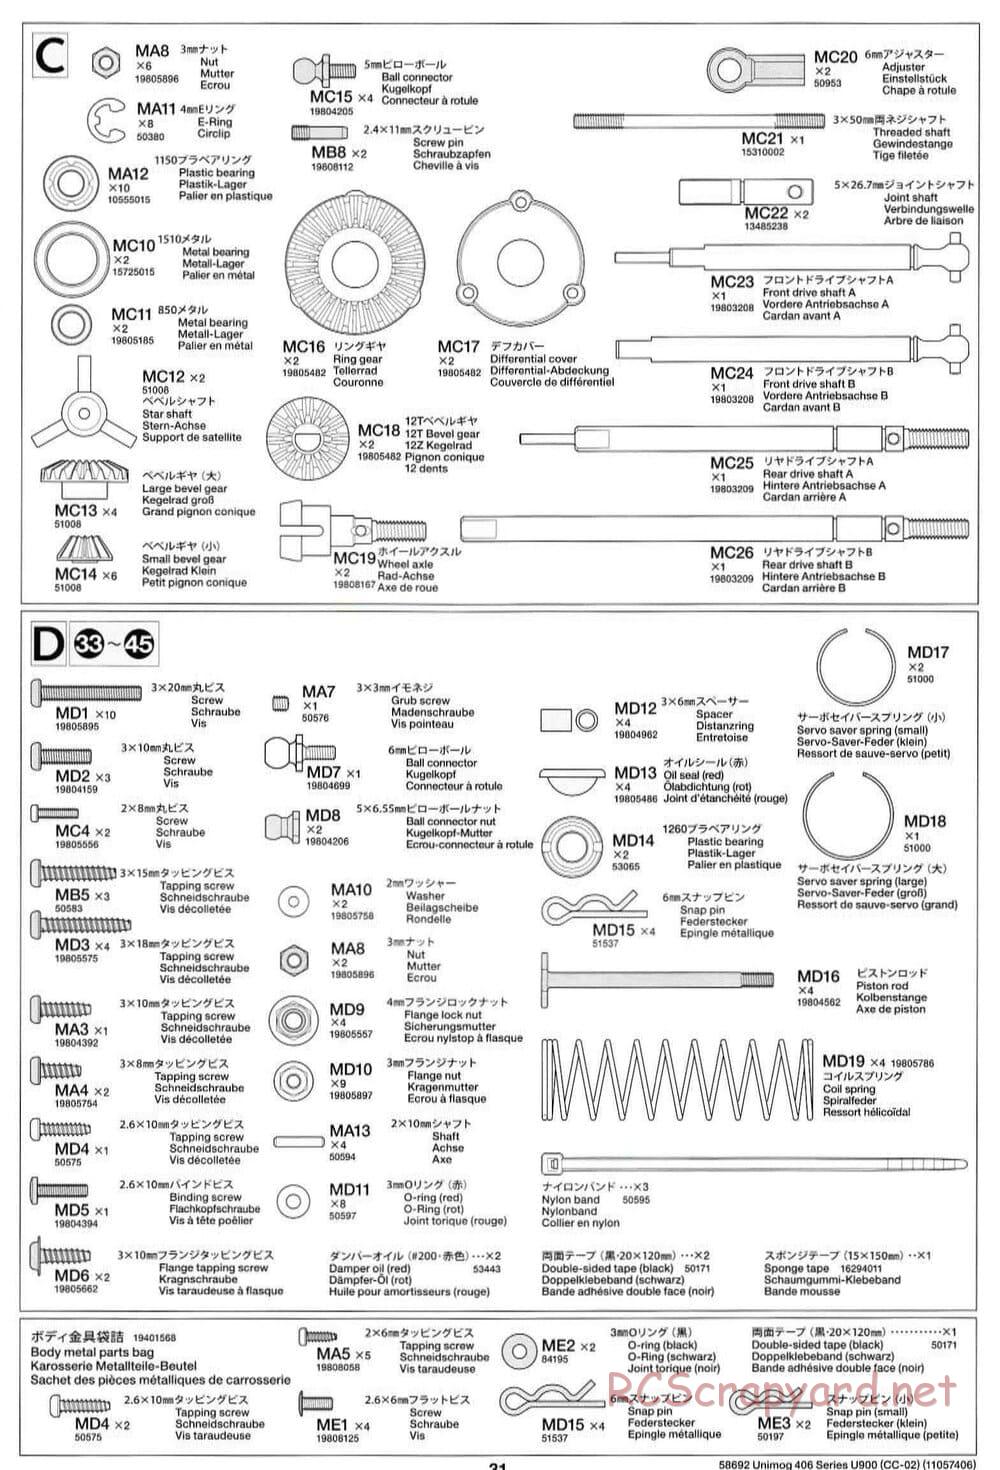 Tamiya - Mercedes-Benz Unimog 406 Series U900 - CC-02 Chassis - Manual - Page 31